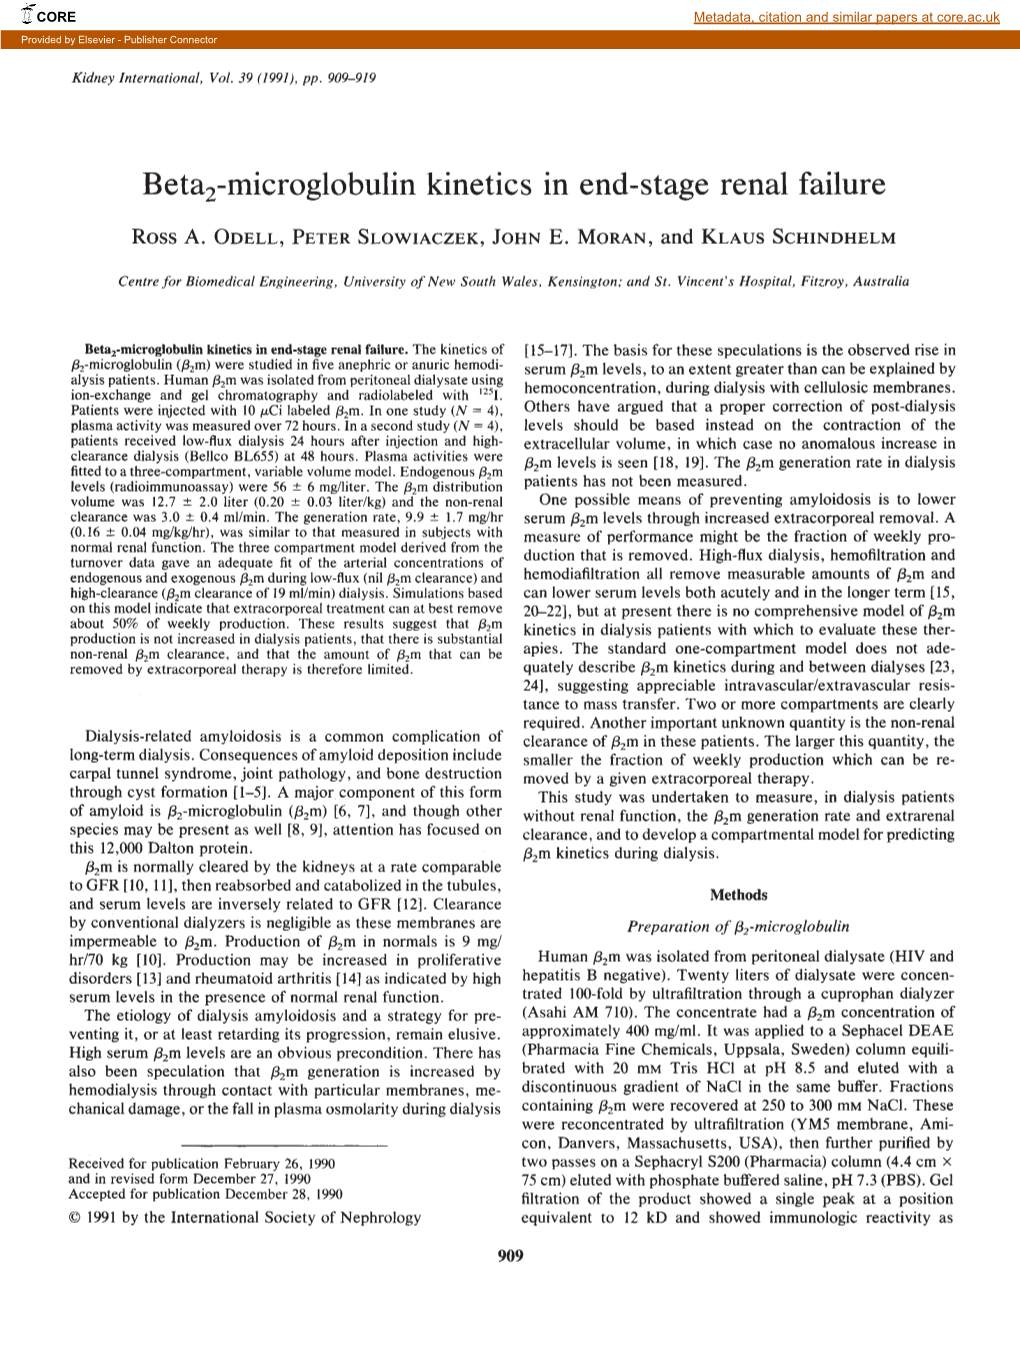 Beta2-Microglobulin Kinetics in End-Stage Renal Failure